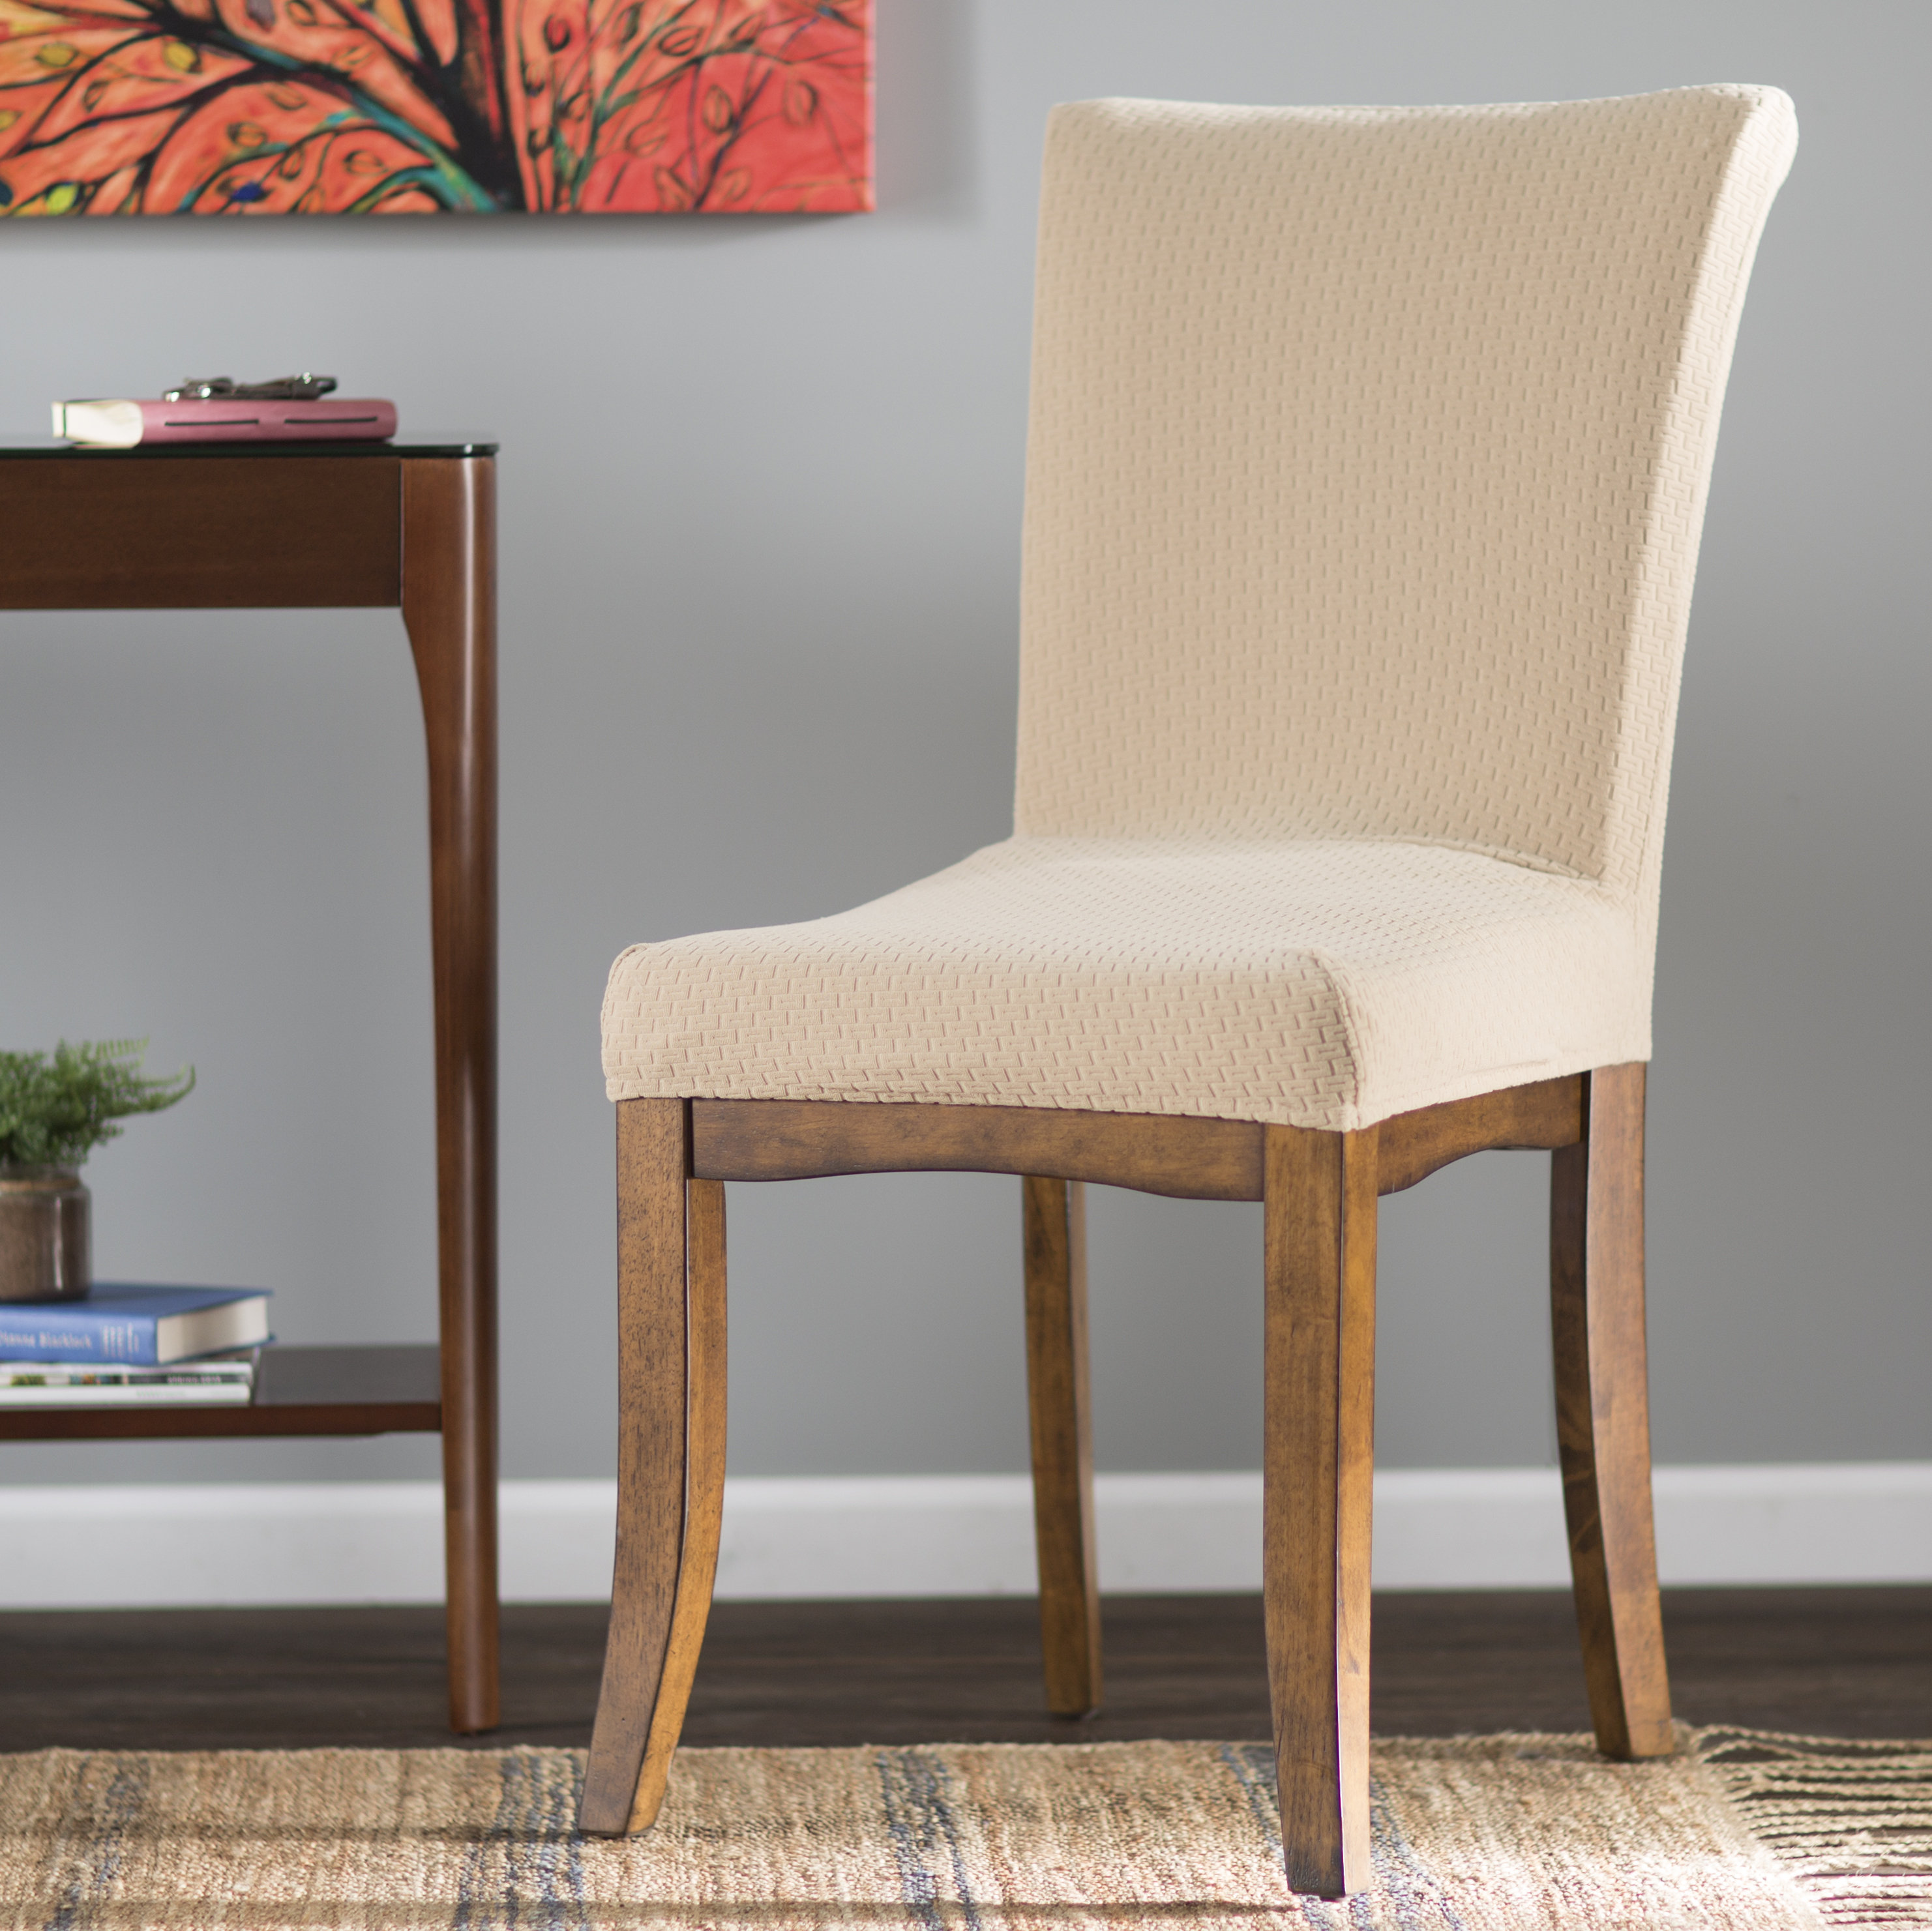 Red Barrel Studio Box Cushion Dining Room Chair Slipcover Reviews Wayfair